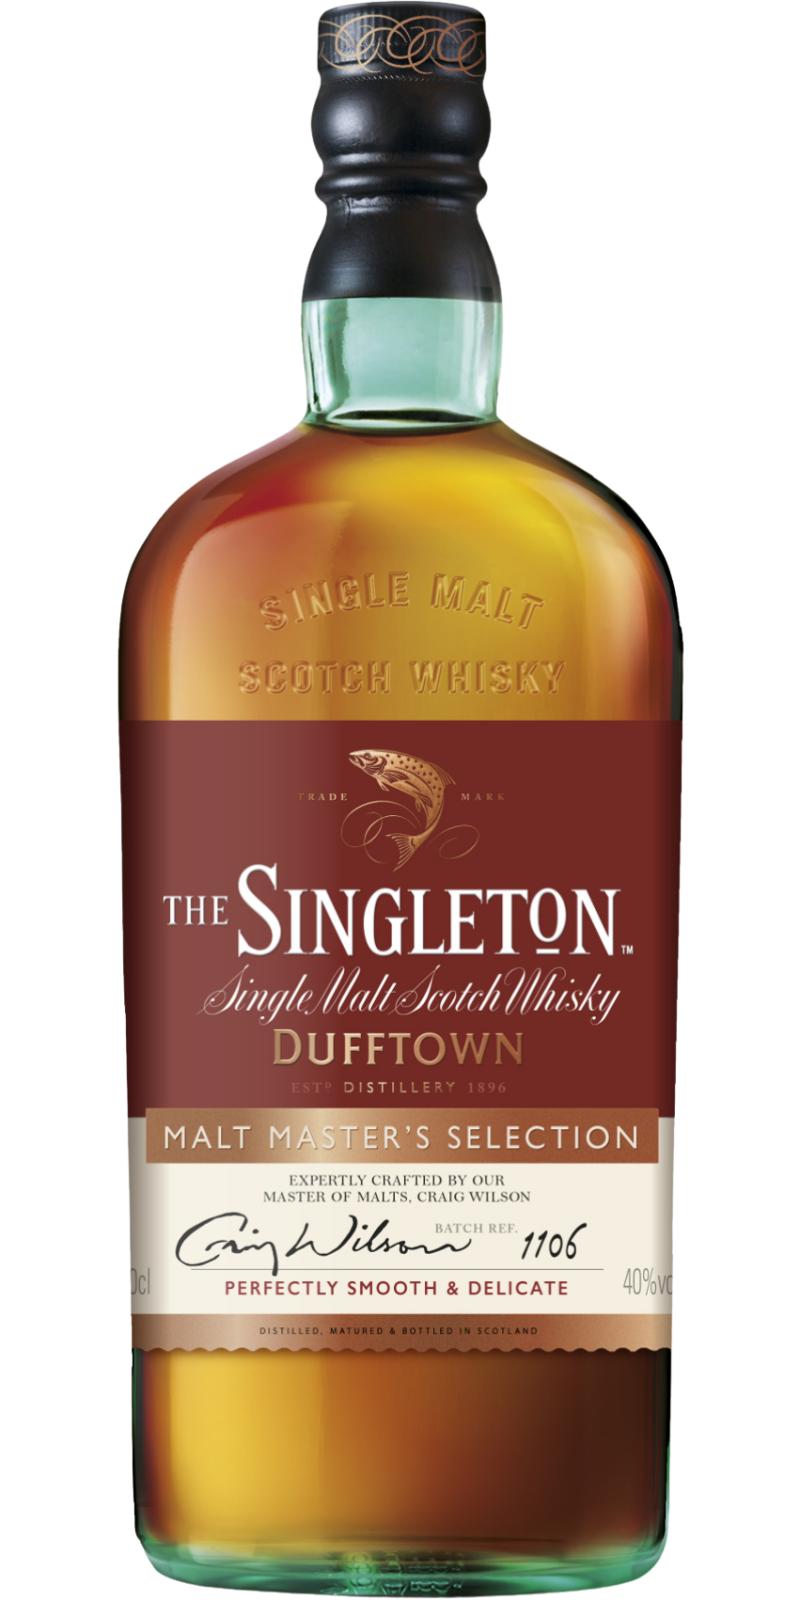 The Singleton of Dufftown Malt Master's Selection Refill Sherry and Bourbon 40% 700ml